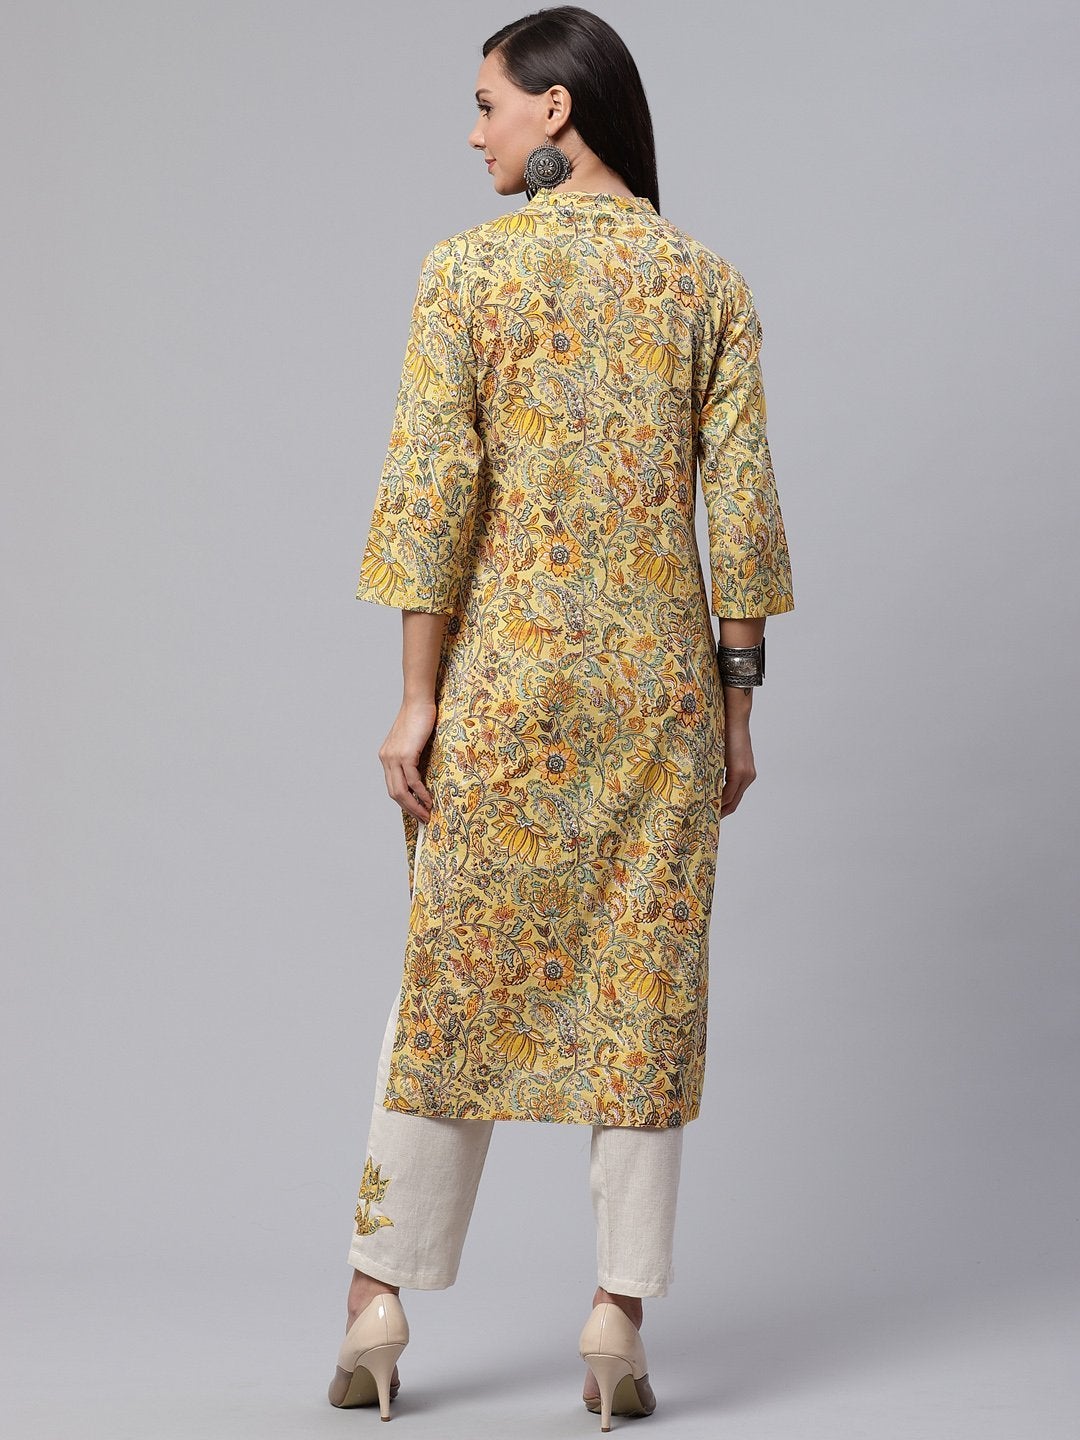 Women's The Dressify Yellow Cotton Kurti With Cotton Flex Pant Set - Divena